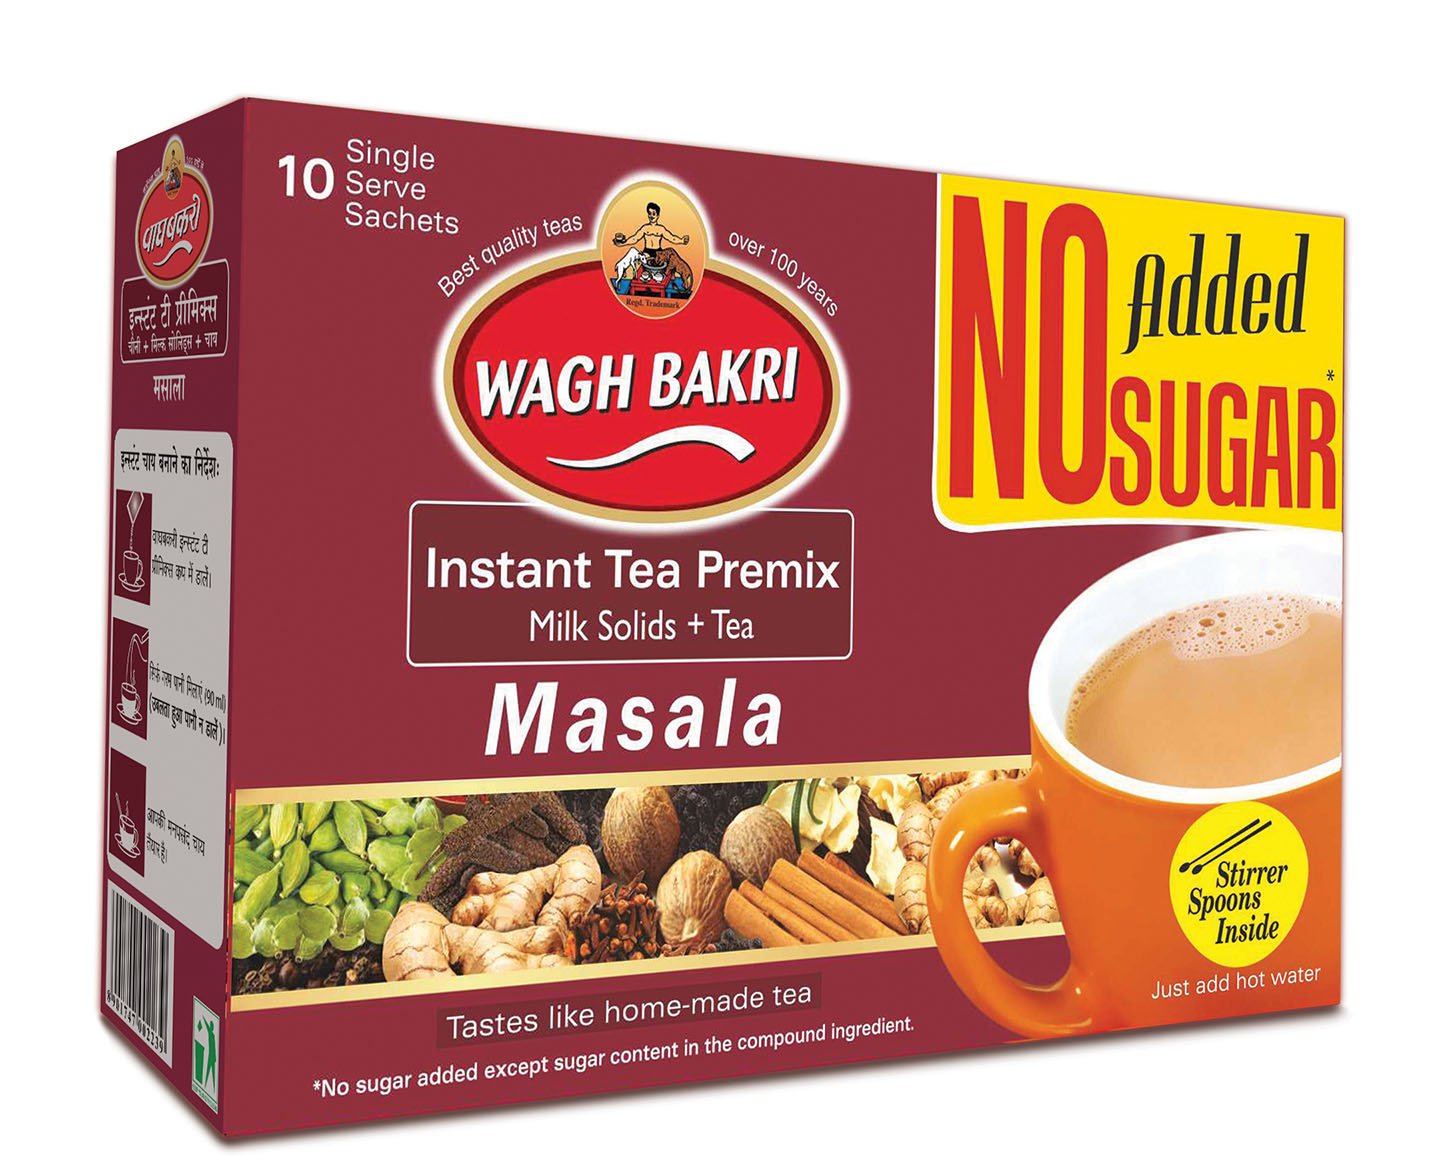 Wagh Bakri Instant Tea Premix Masala No Added Sugar Image